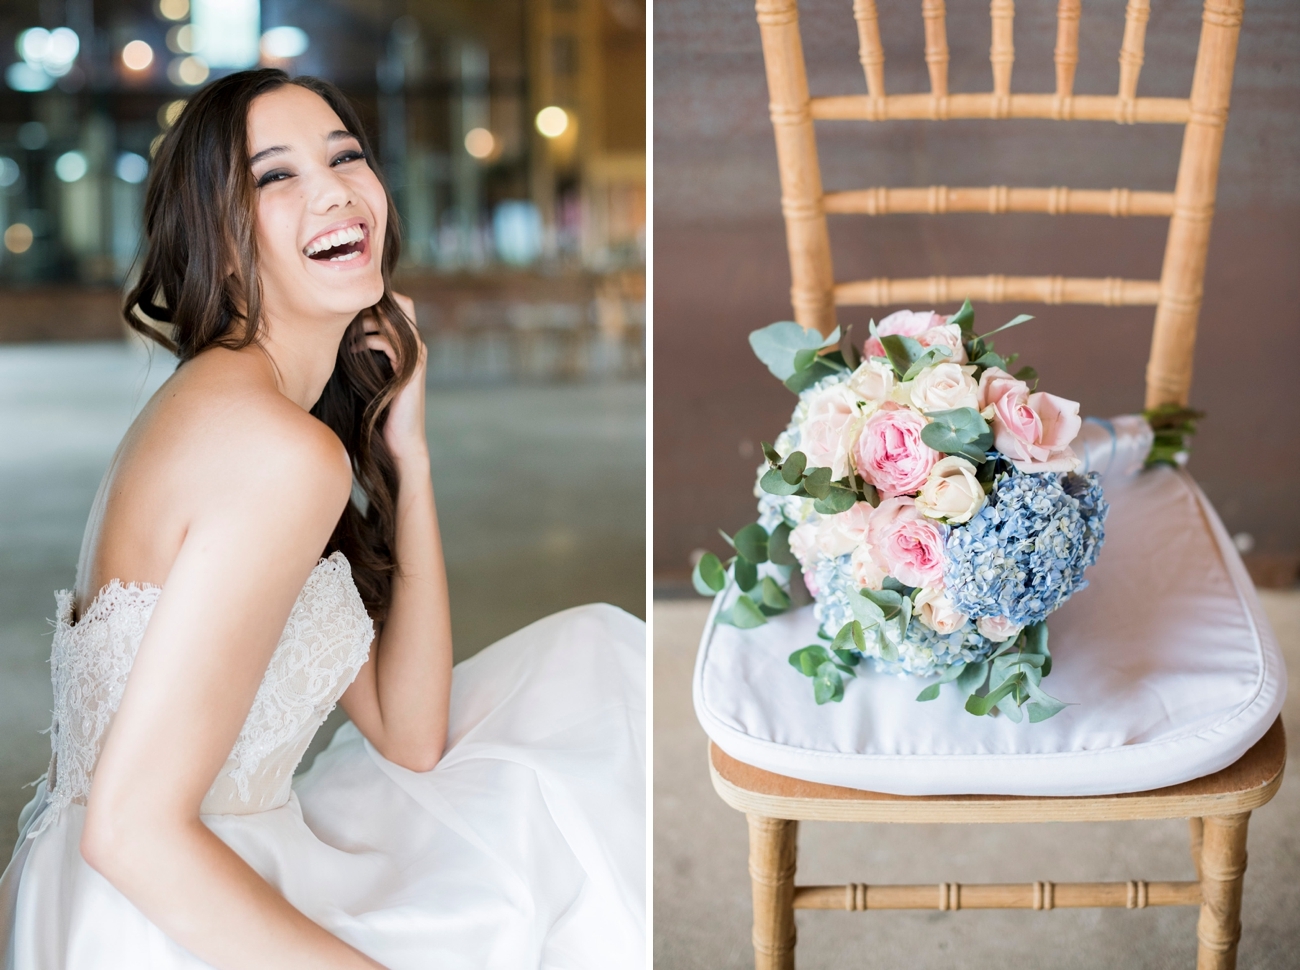 Pantone Serenity & Rose Quartz Wedding Inspiration | Credit: Jack & Jane Photography